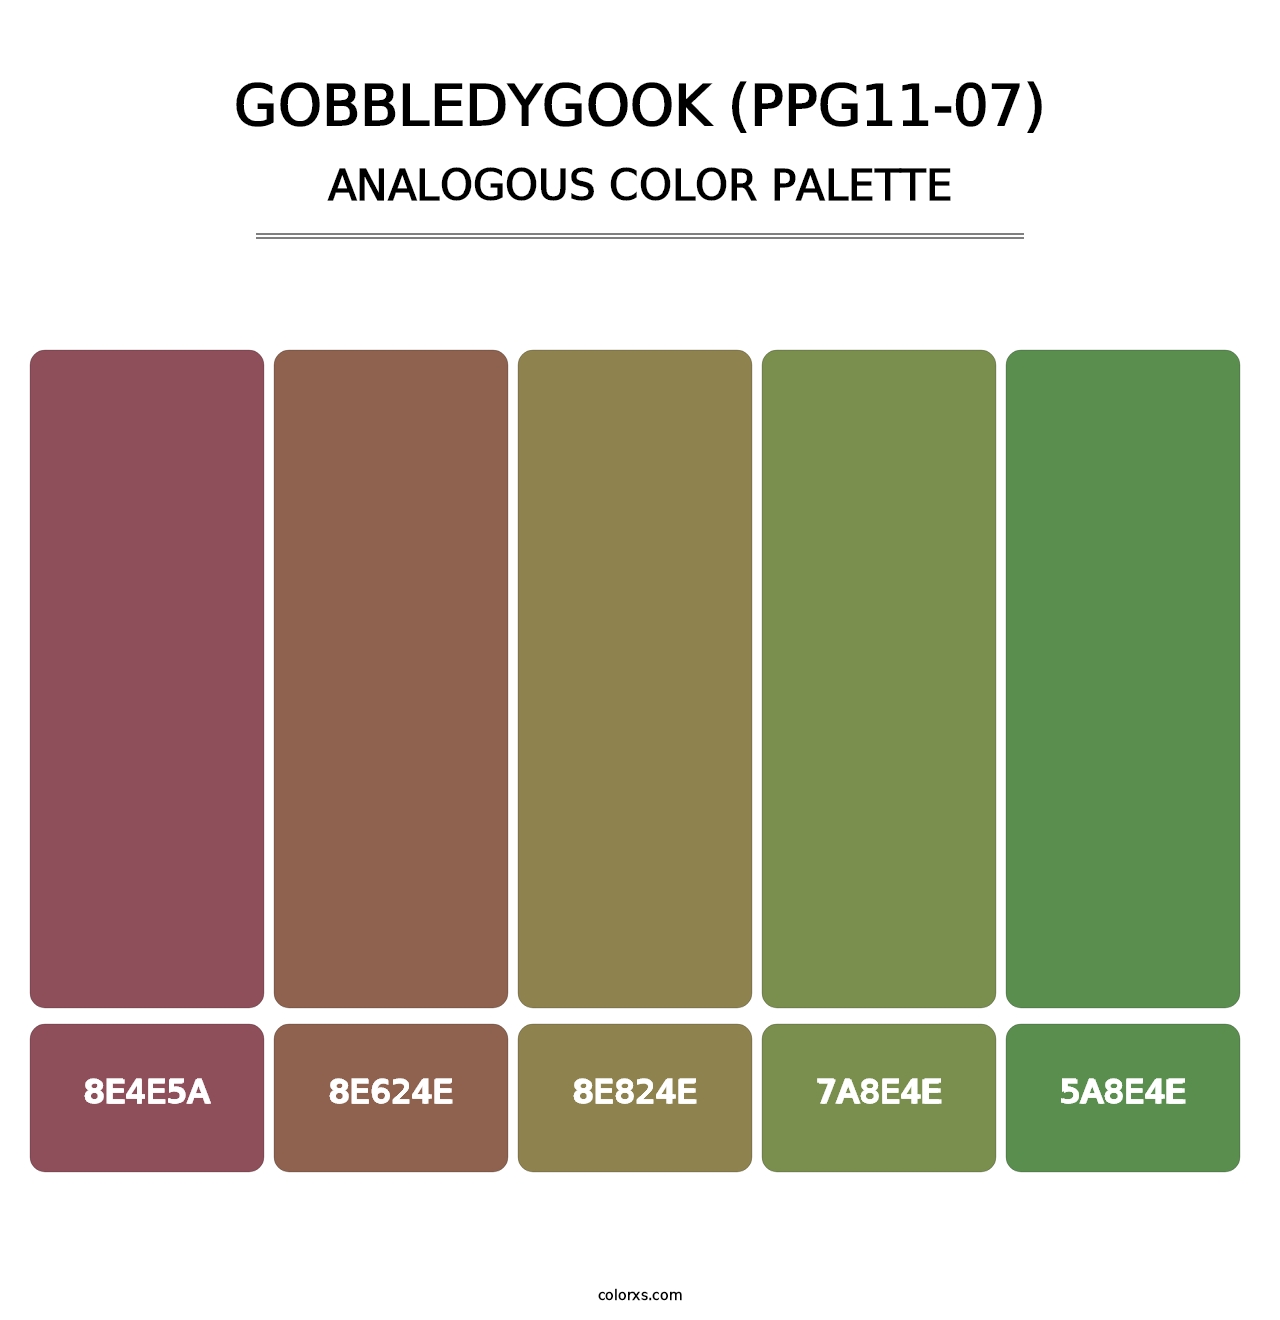 Gobbledygook (PPG11-07) - Analogous Color Palette